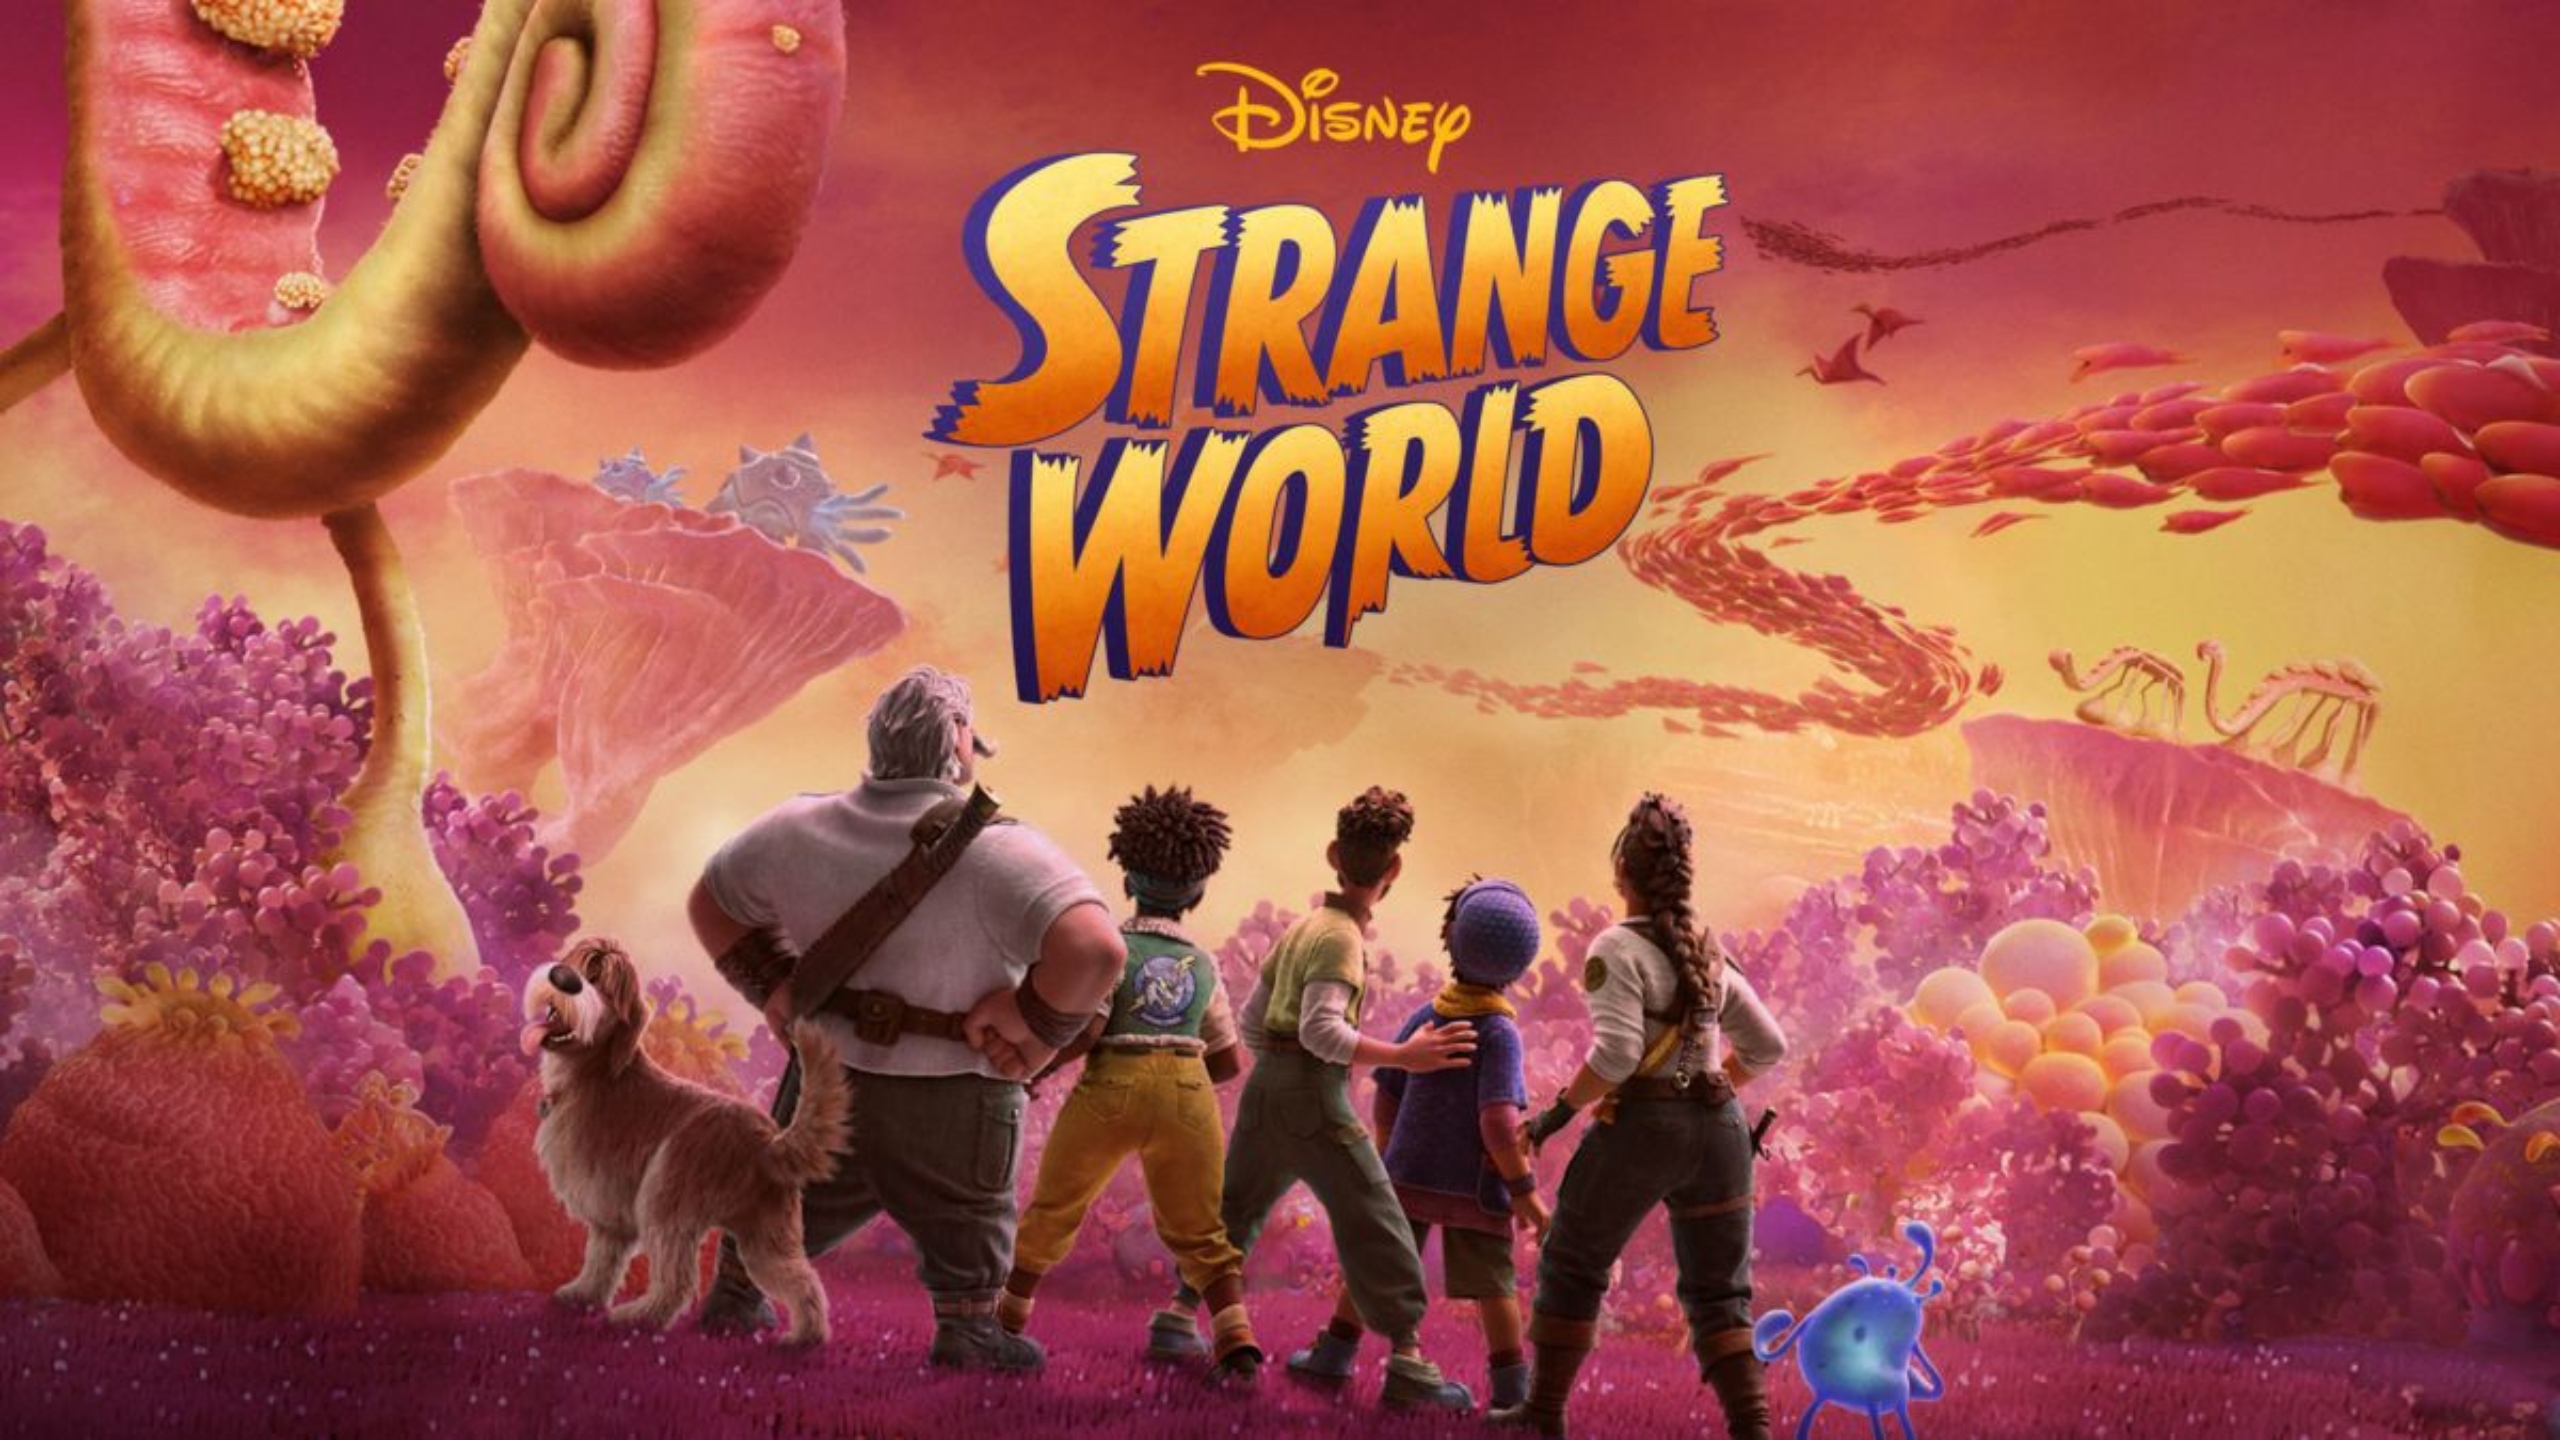 Disney animated film Strange World is making its way to Disney+ on December 23rd